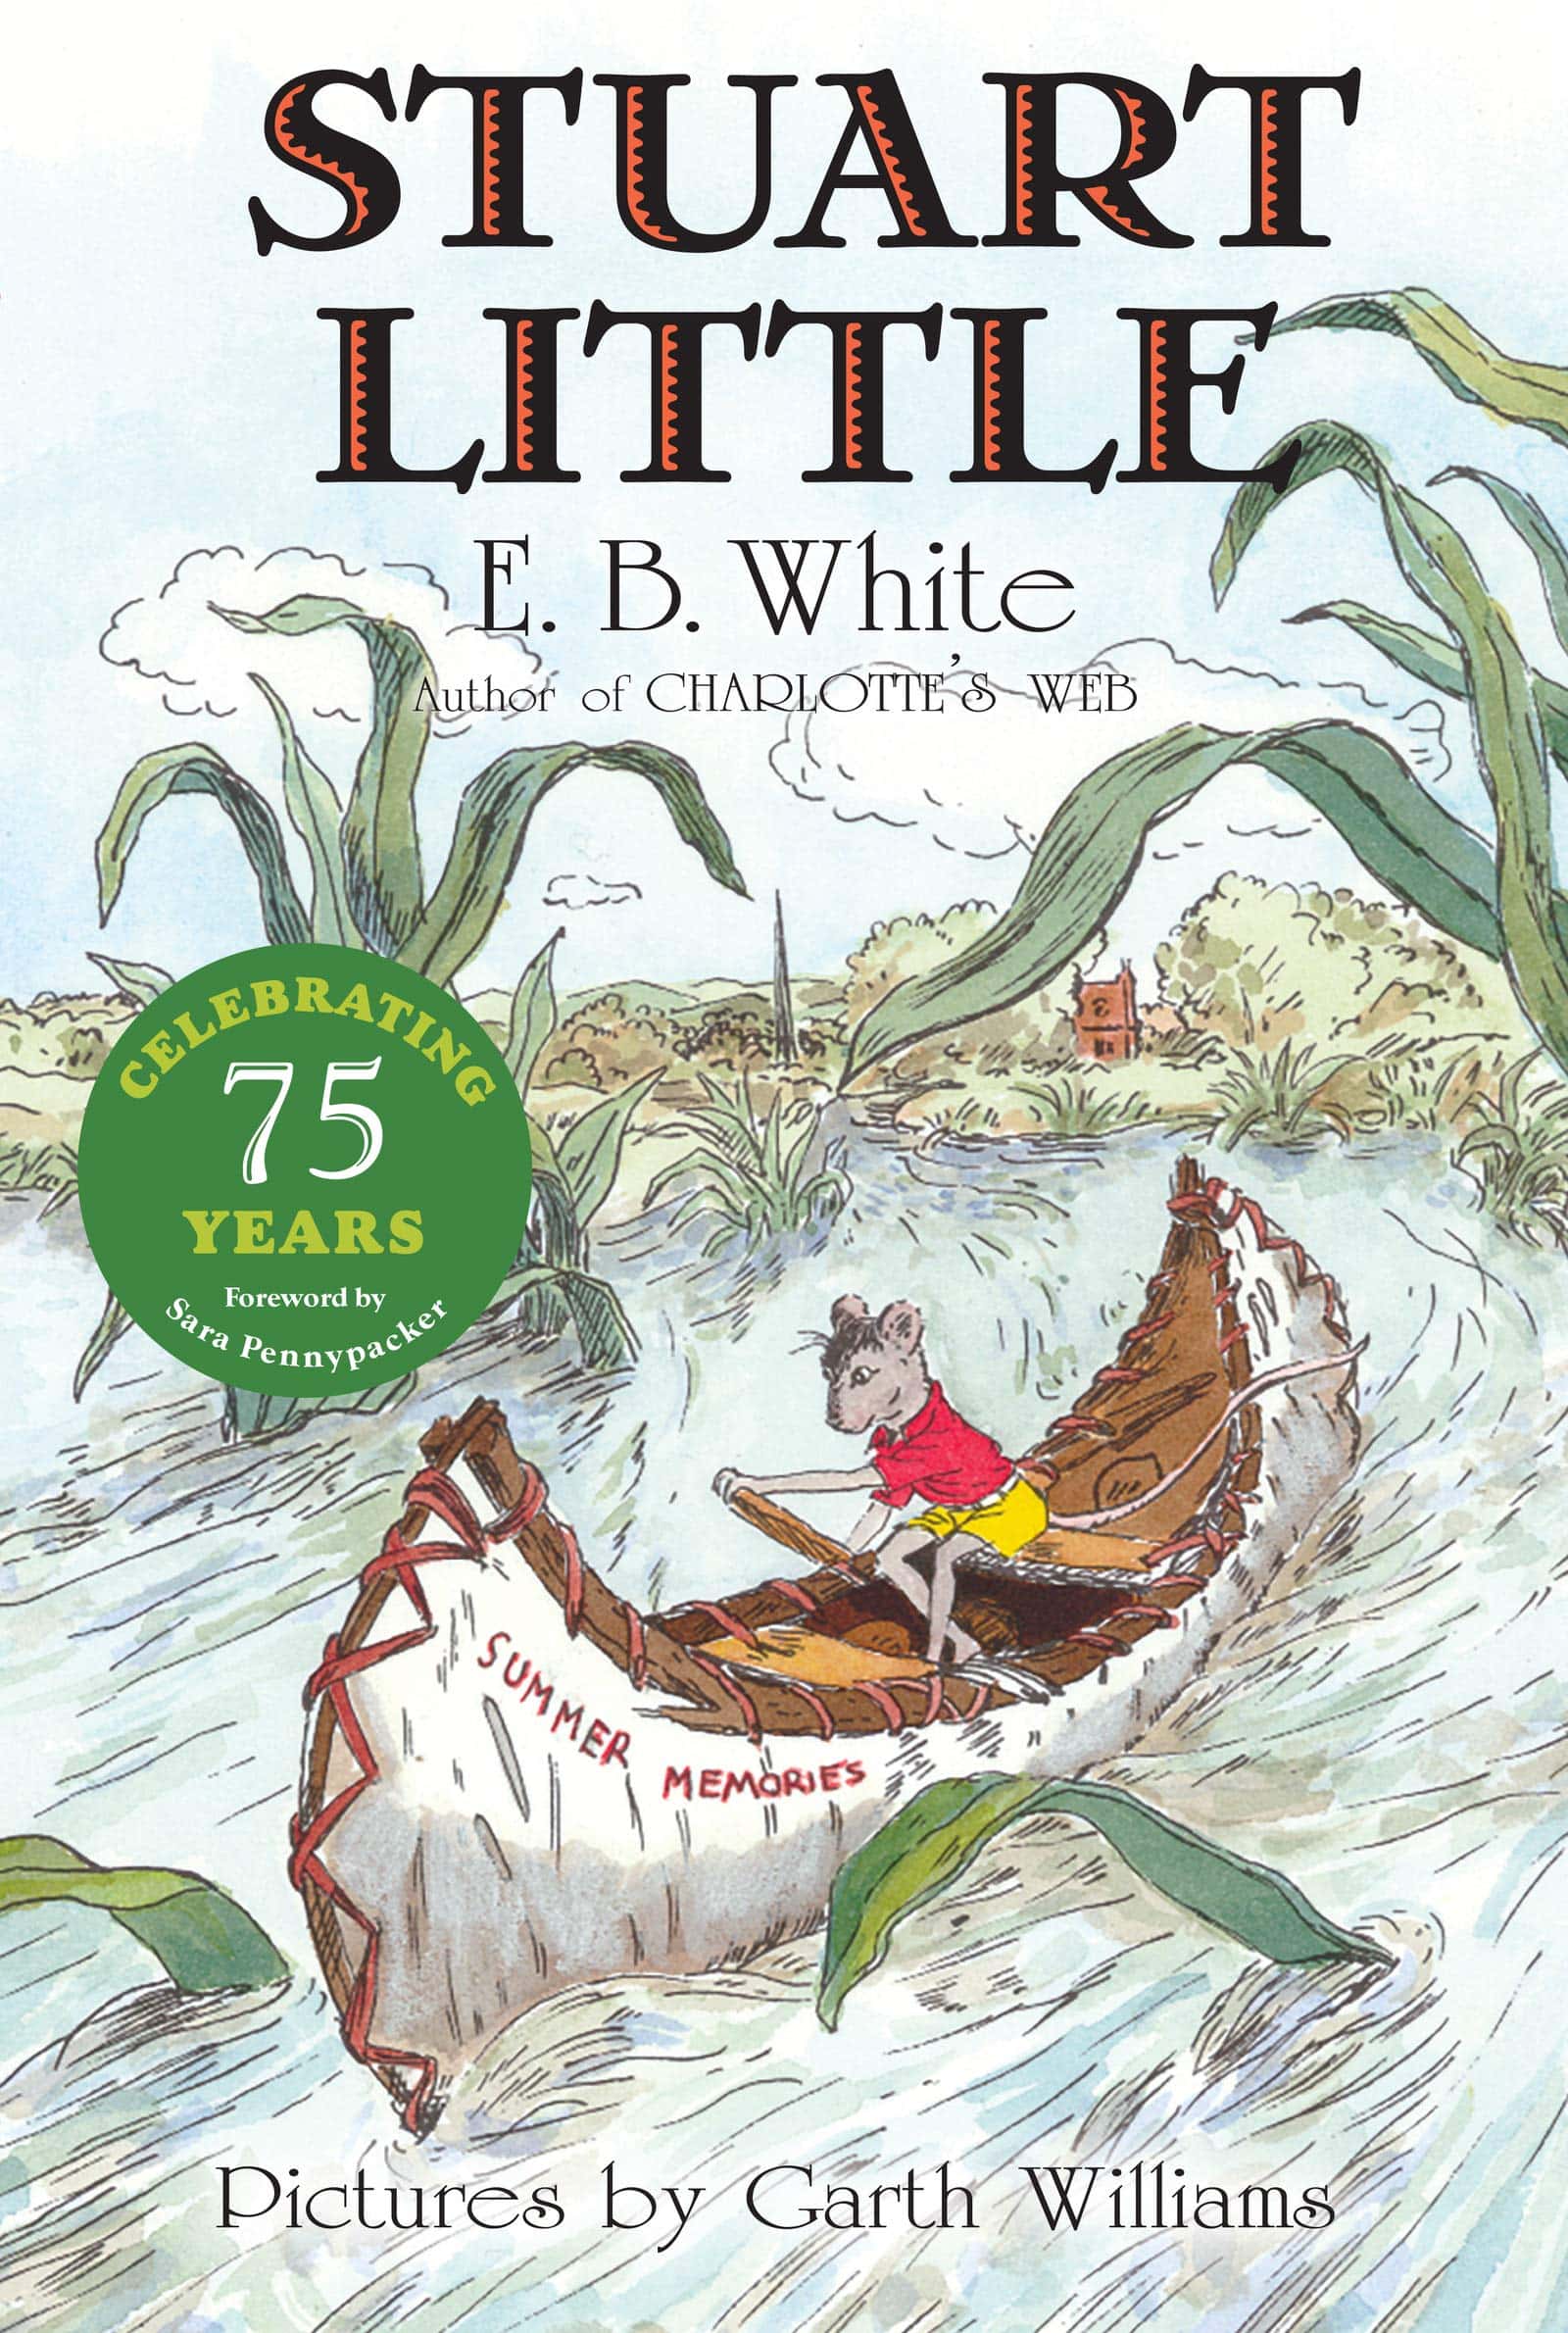 "Stuart Little" by E.B. White